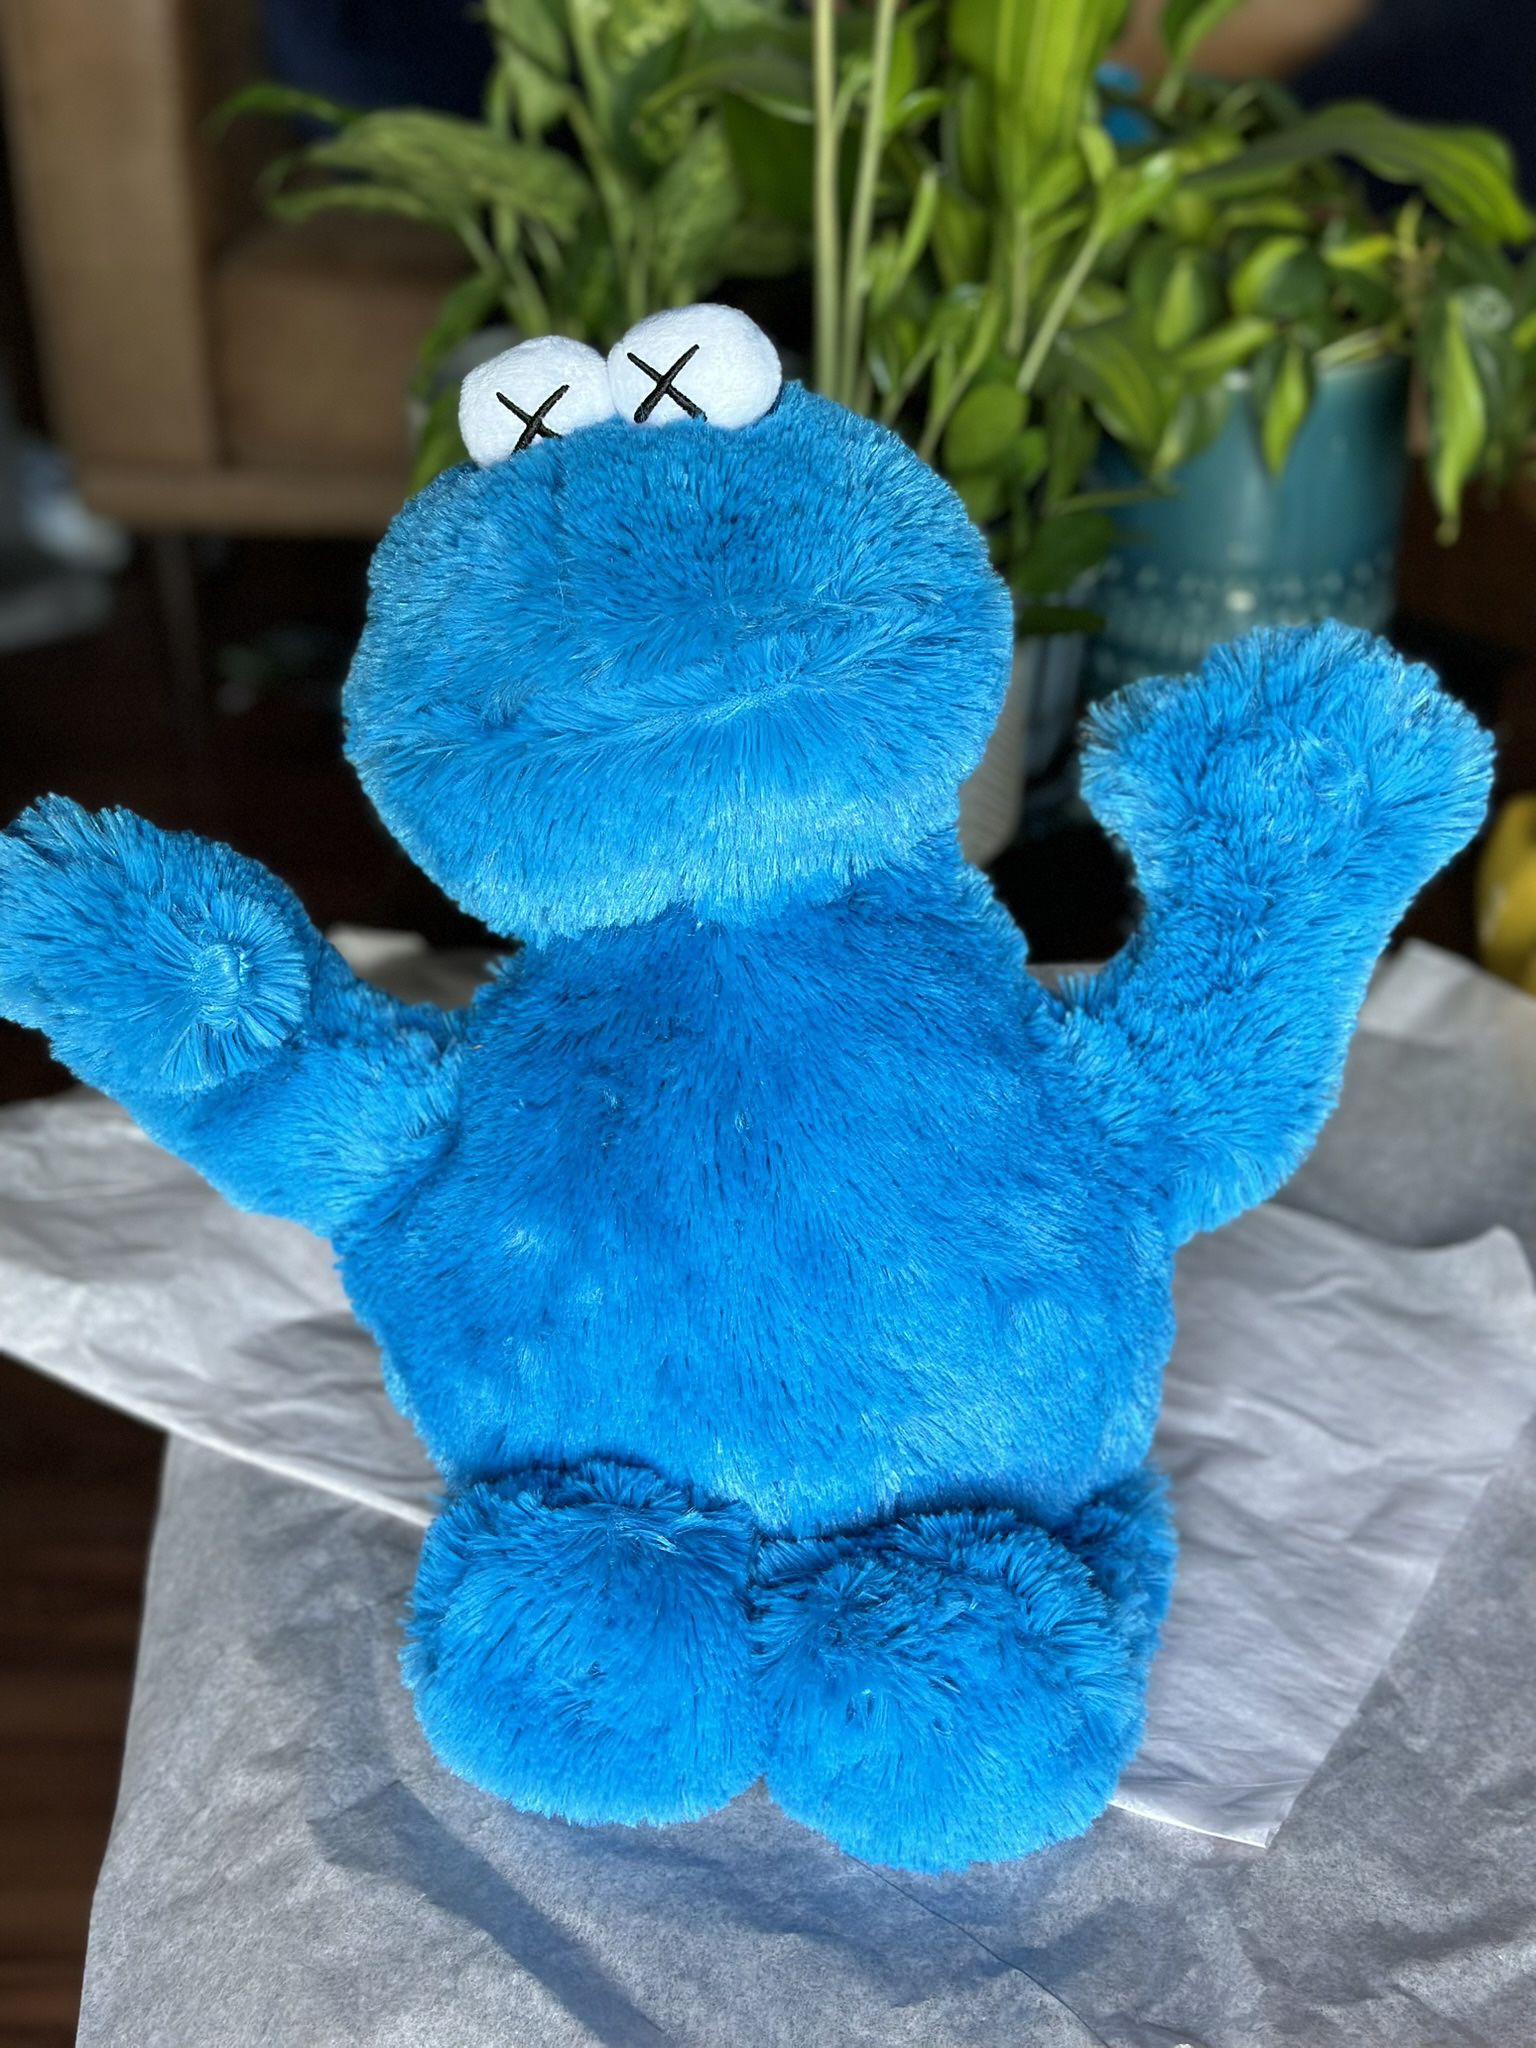 KAWS Sesame Street Uniqlo Cookie Monster Plush Toy